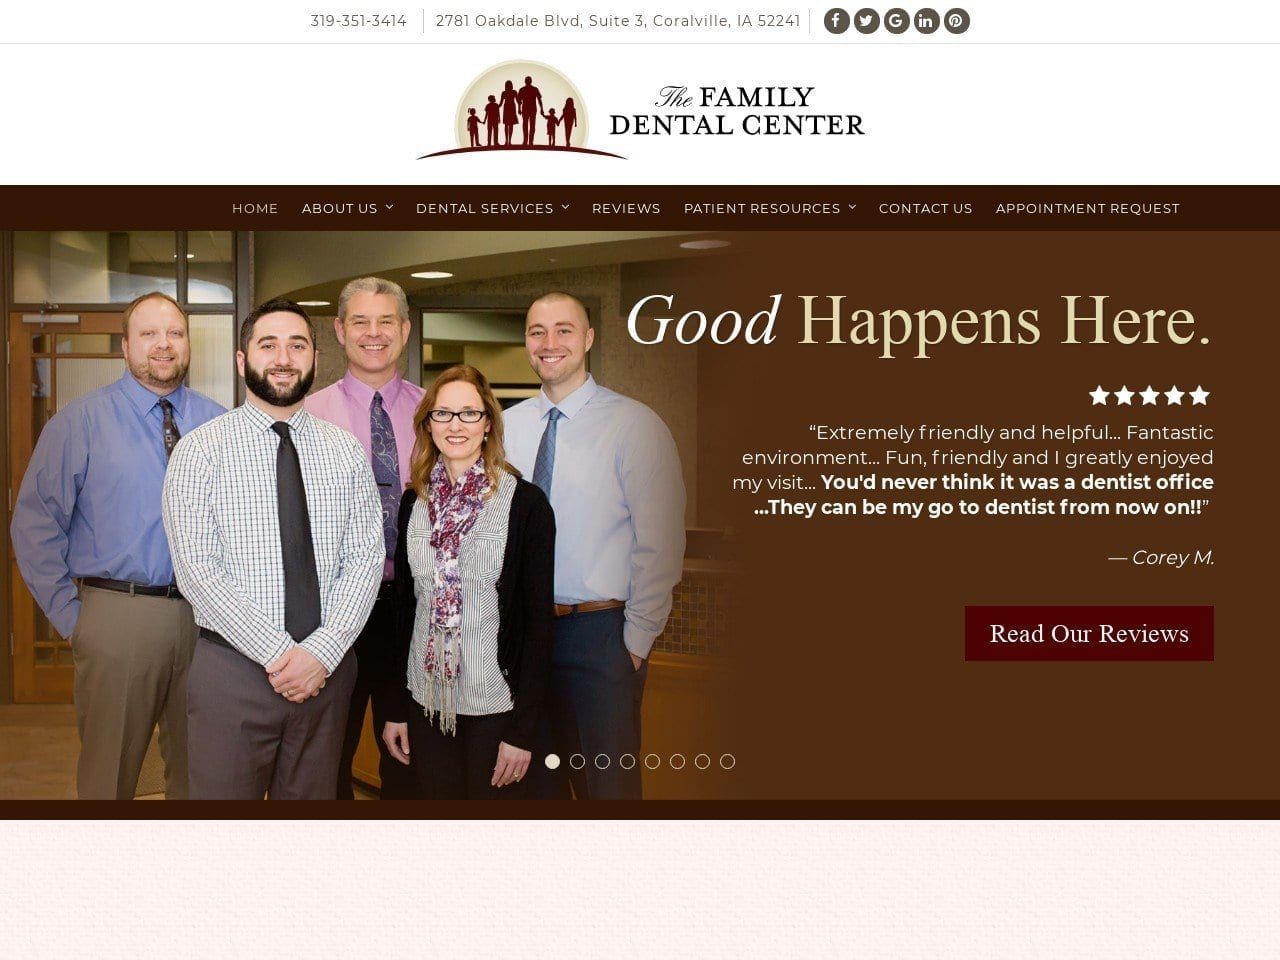 Family Dental Center Gilbaugh Gregory DDS Website Screenshot from thefamilydentalcenter.com